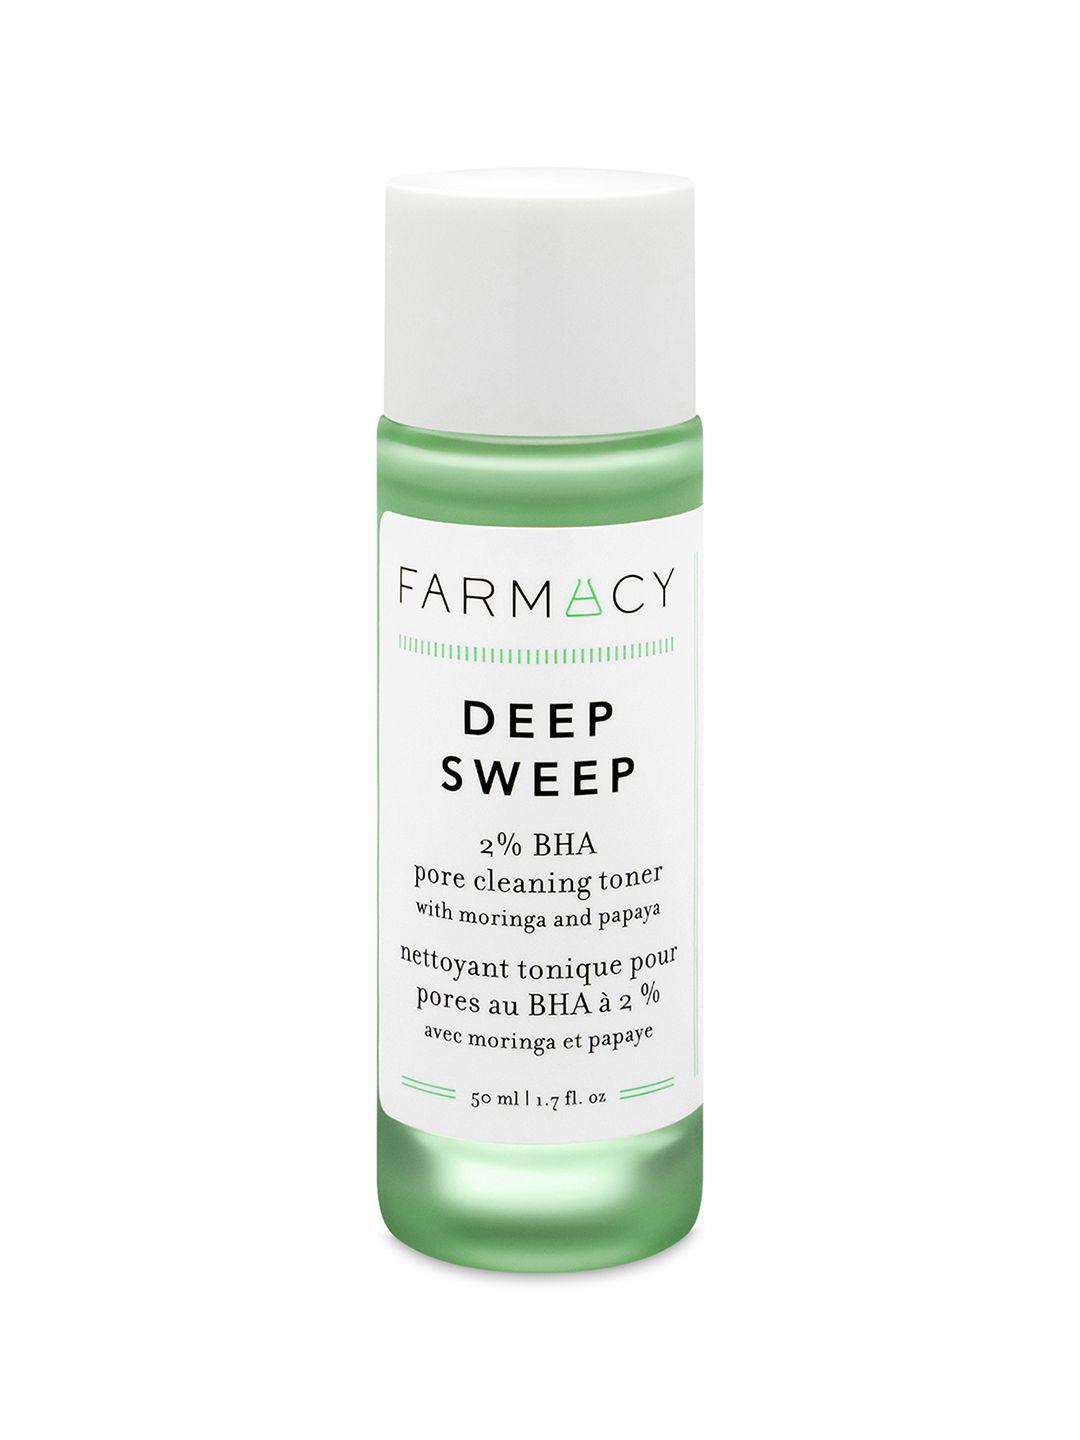 farmacy beauty deep sweep 2% bha pore cleaning toner with moringa - 50 ml